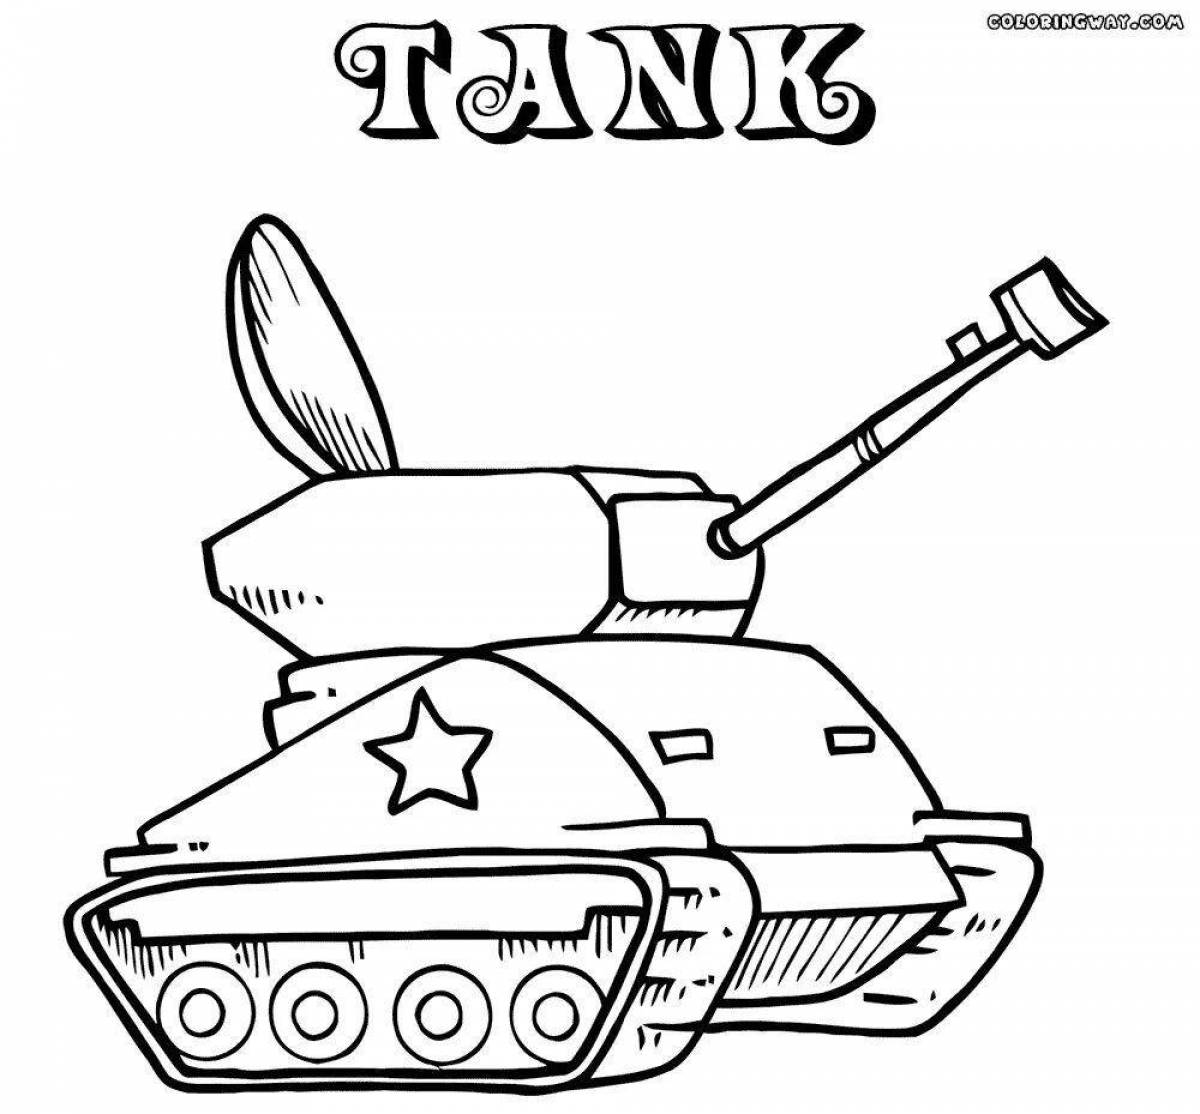 Terrific tank with sparkling eyes